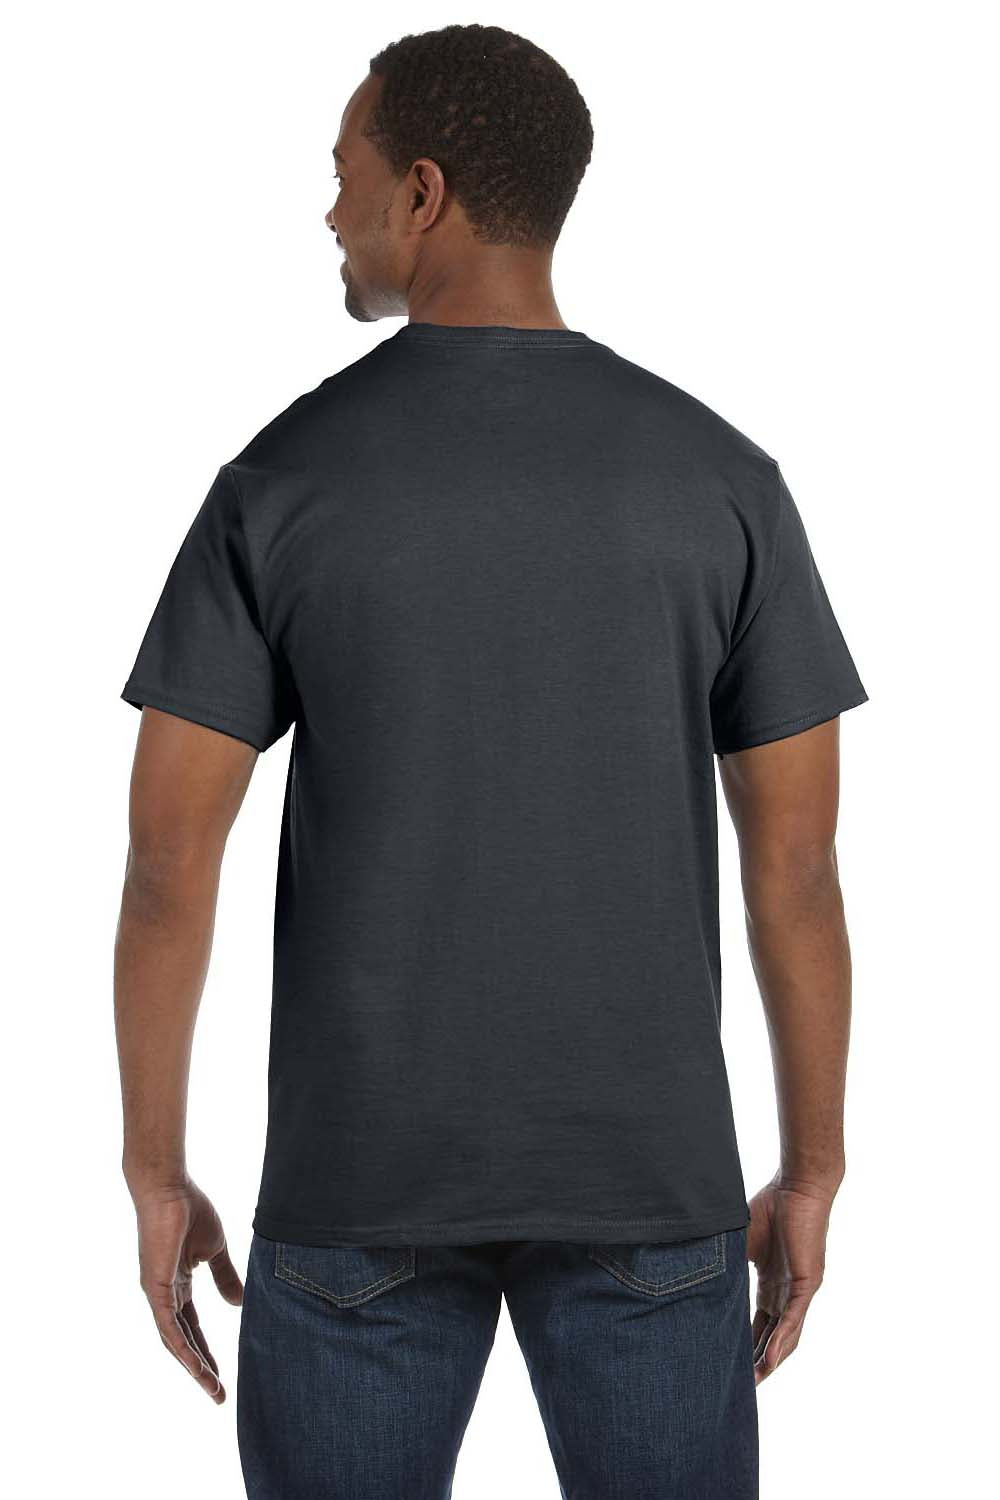 Jerzees 29M Mens Dri-Power Moisture Wicking Short Sleeve Crewneck T-Shirt Charcoal Grey Back